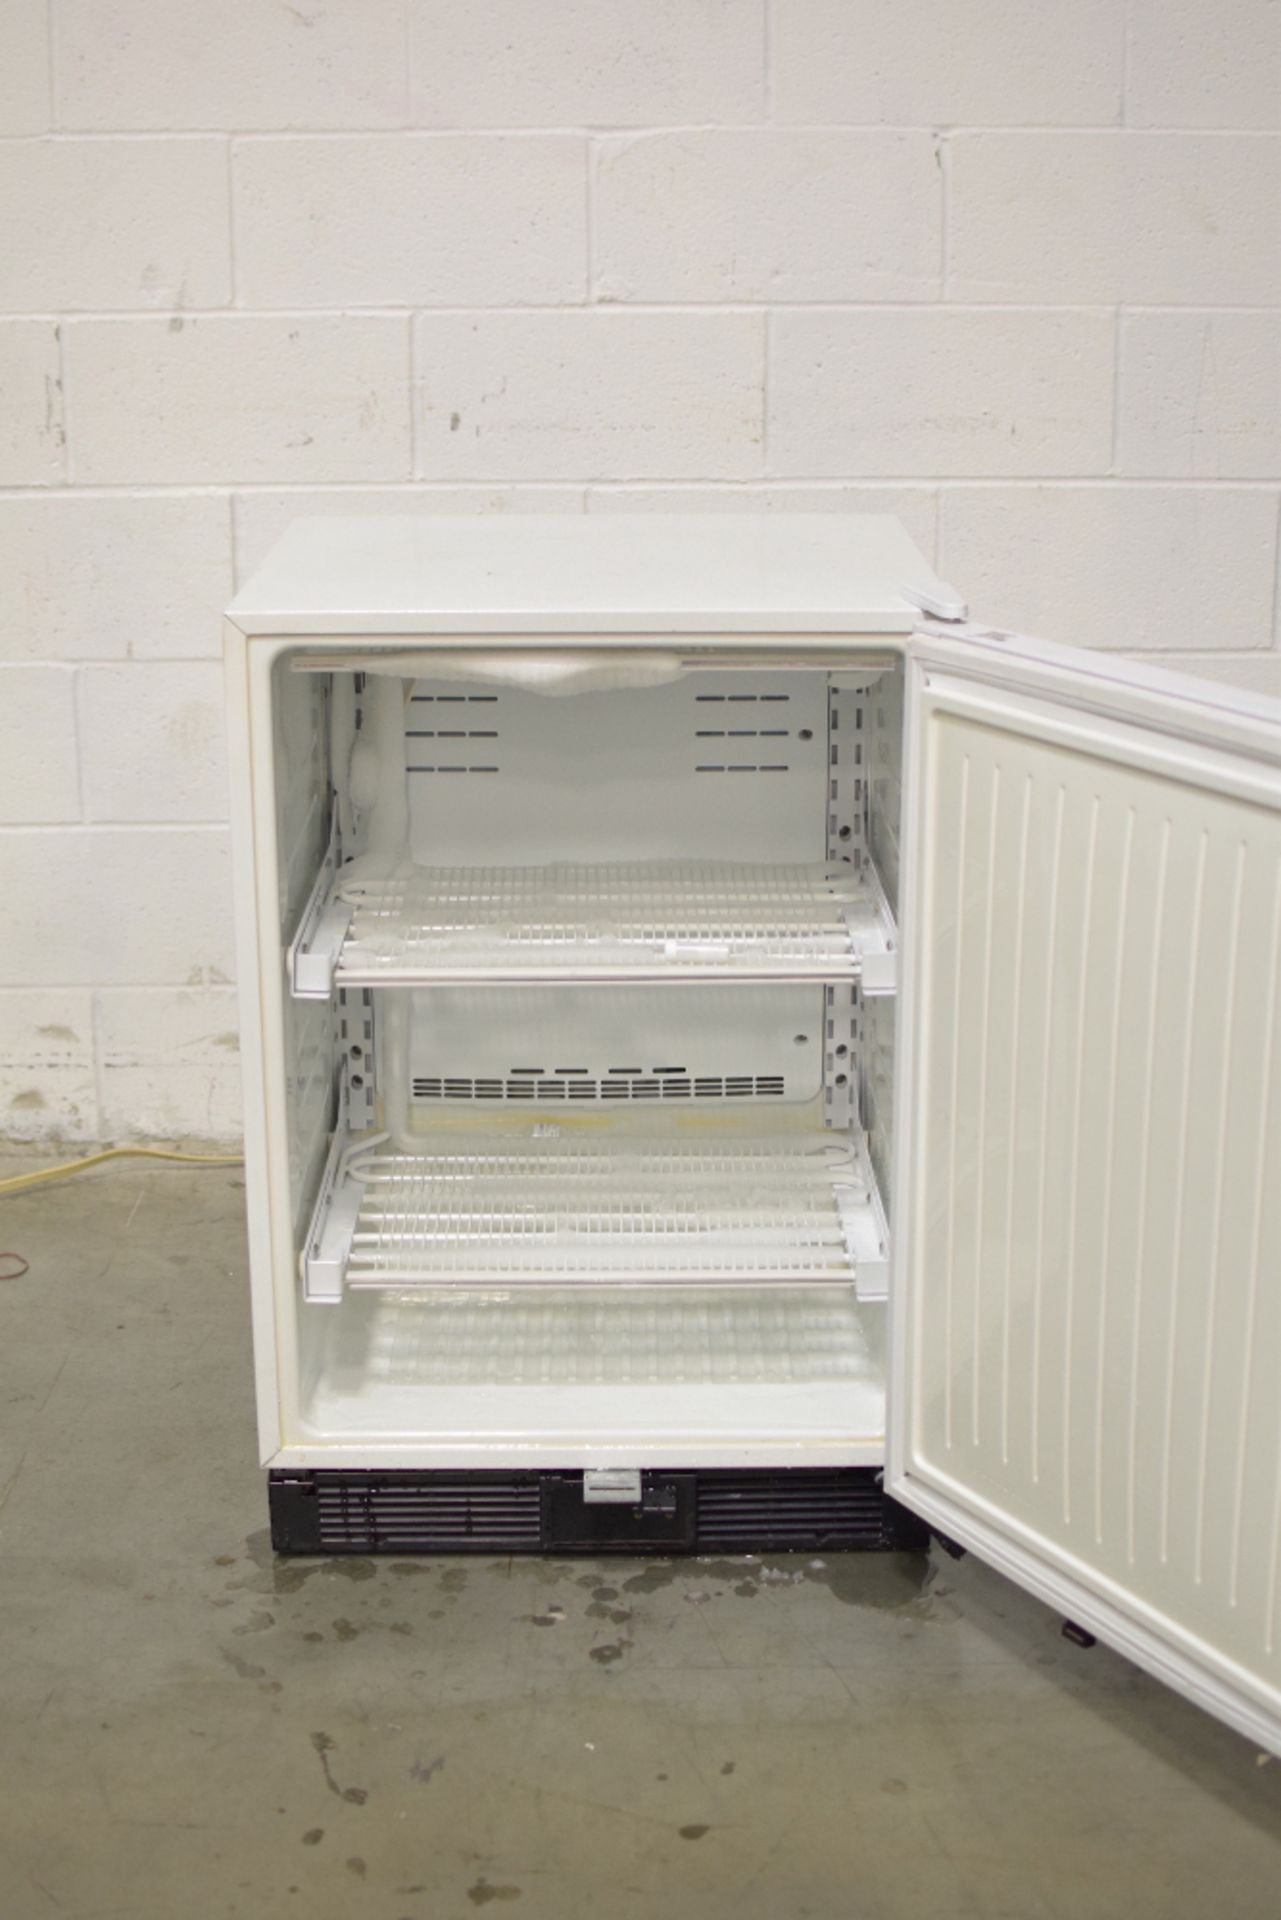 Sanyo SF-L6111W Undercounter Refrigerator - Image 2 of 2